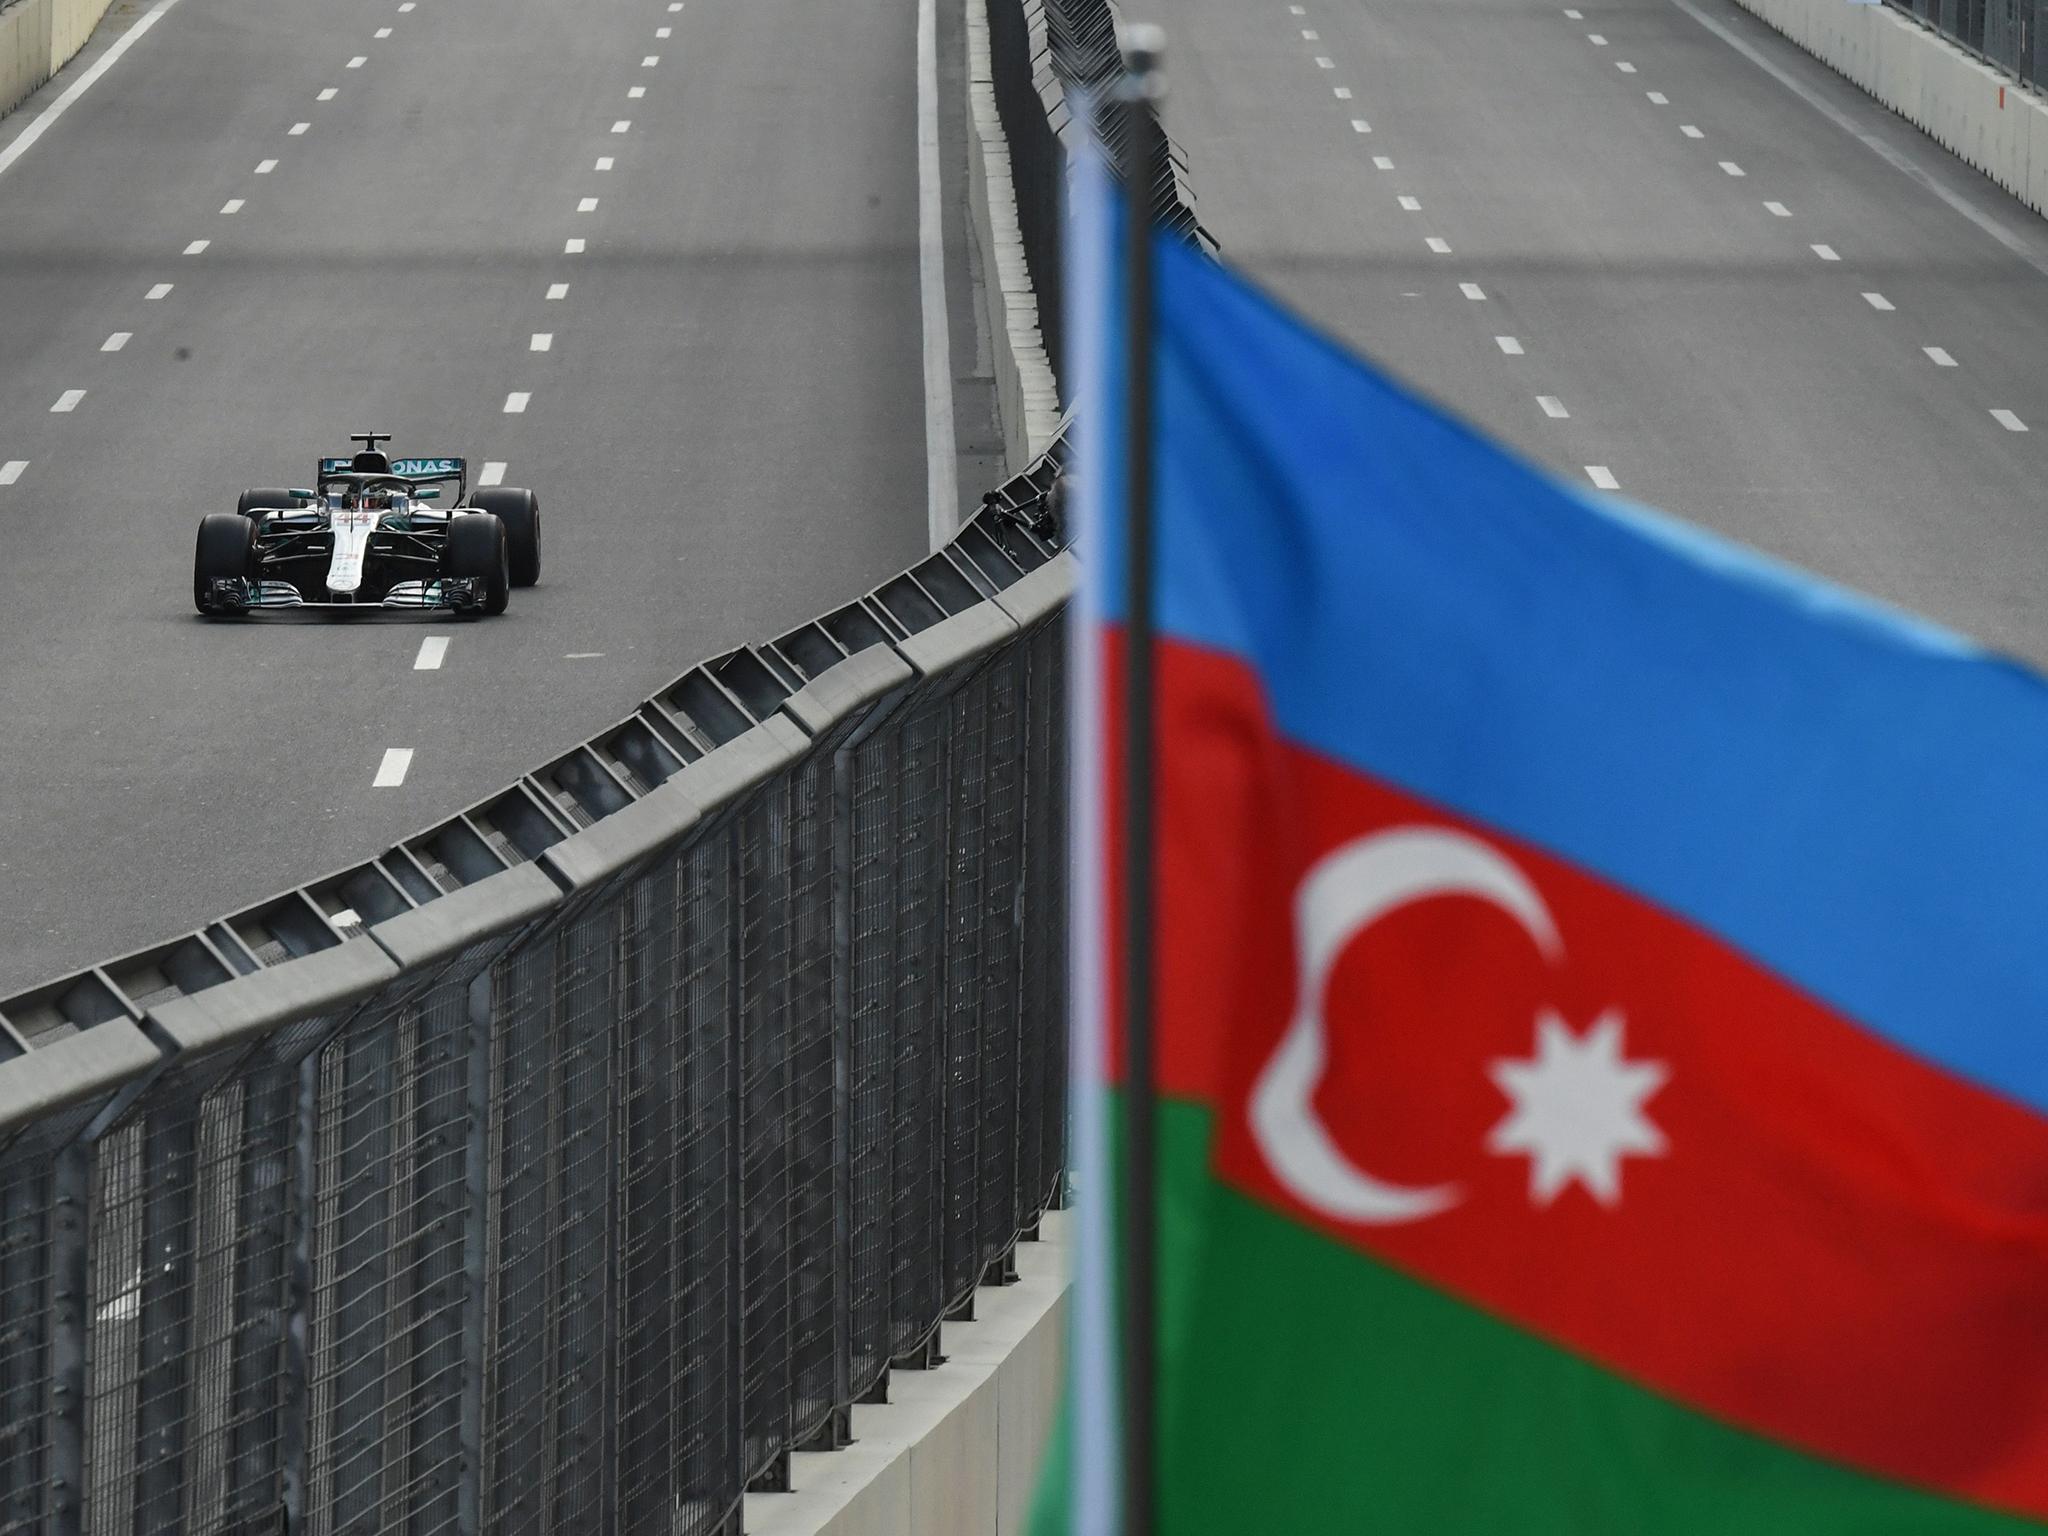 Hamilton is confident the Baku circuit means he can challenge Vettel